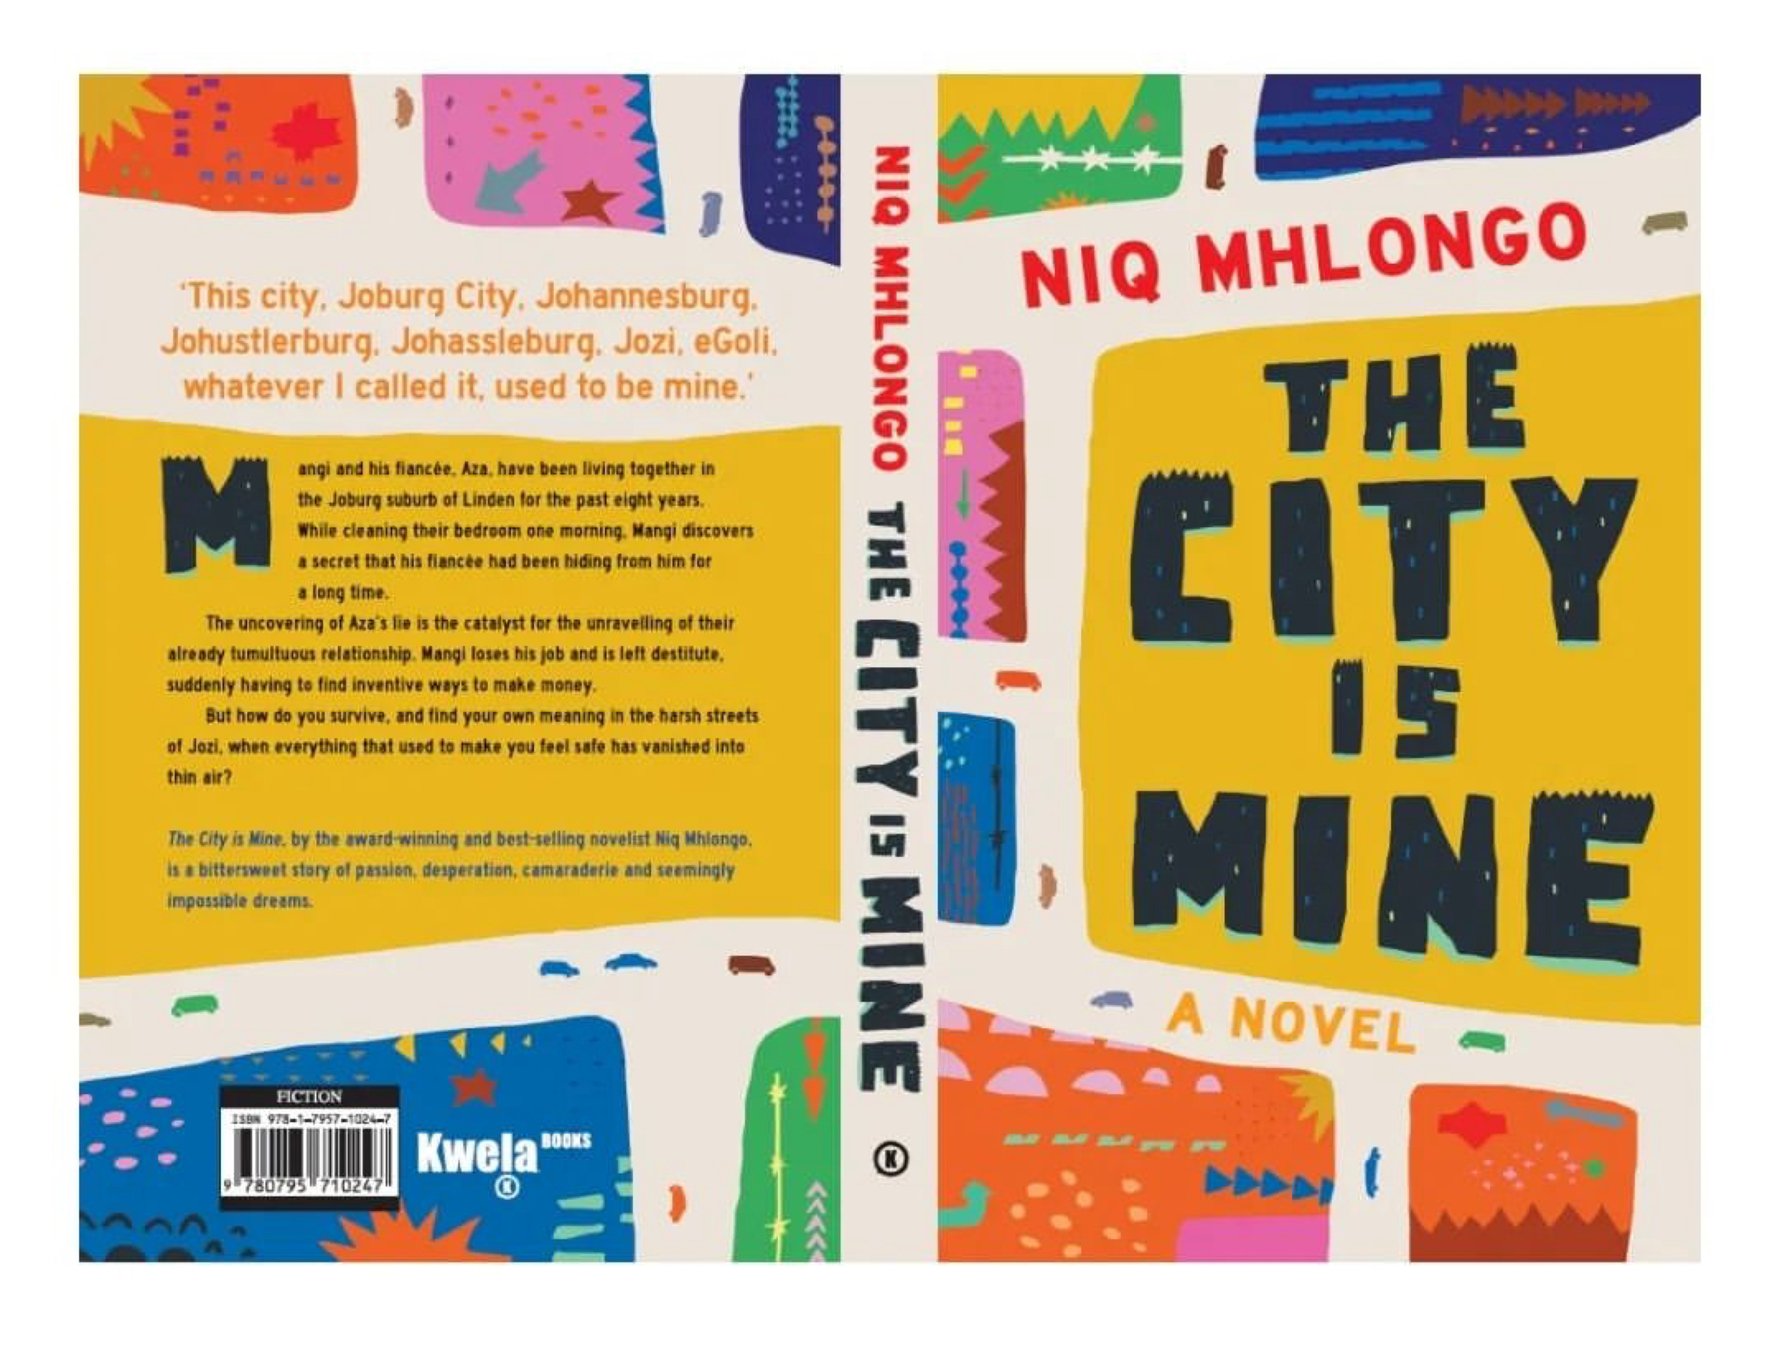 Niq Mhlongo -- Book title